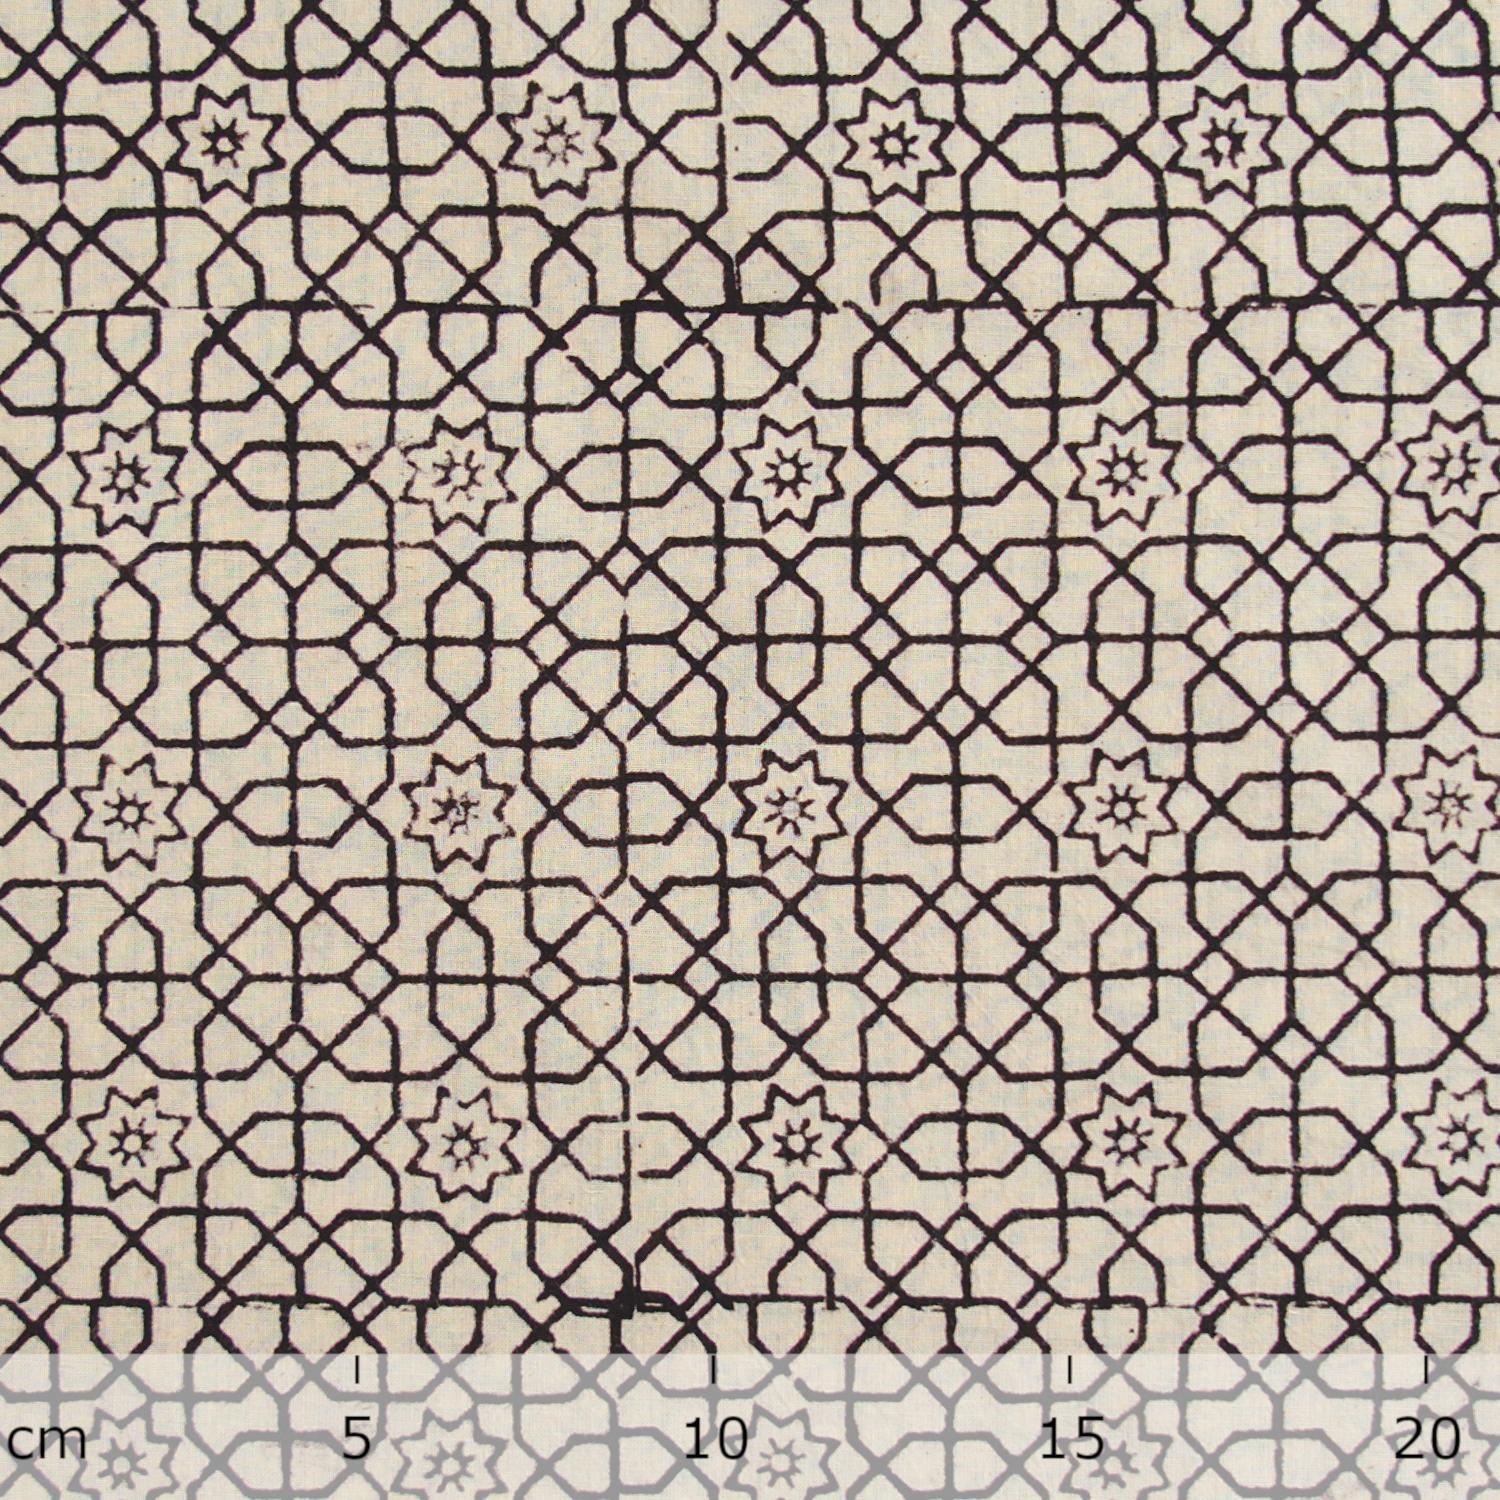 Block Printed Fabric, 100% Cotton, Ajrak Design: Beige Base, Iron Black Octagon. Ruler